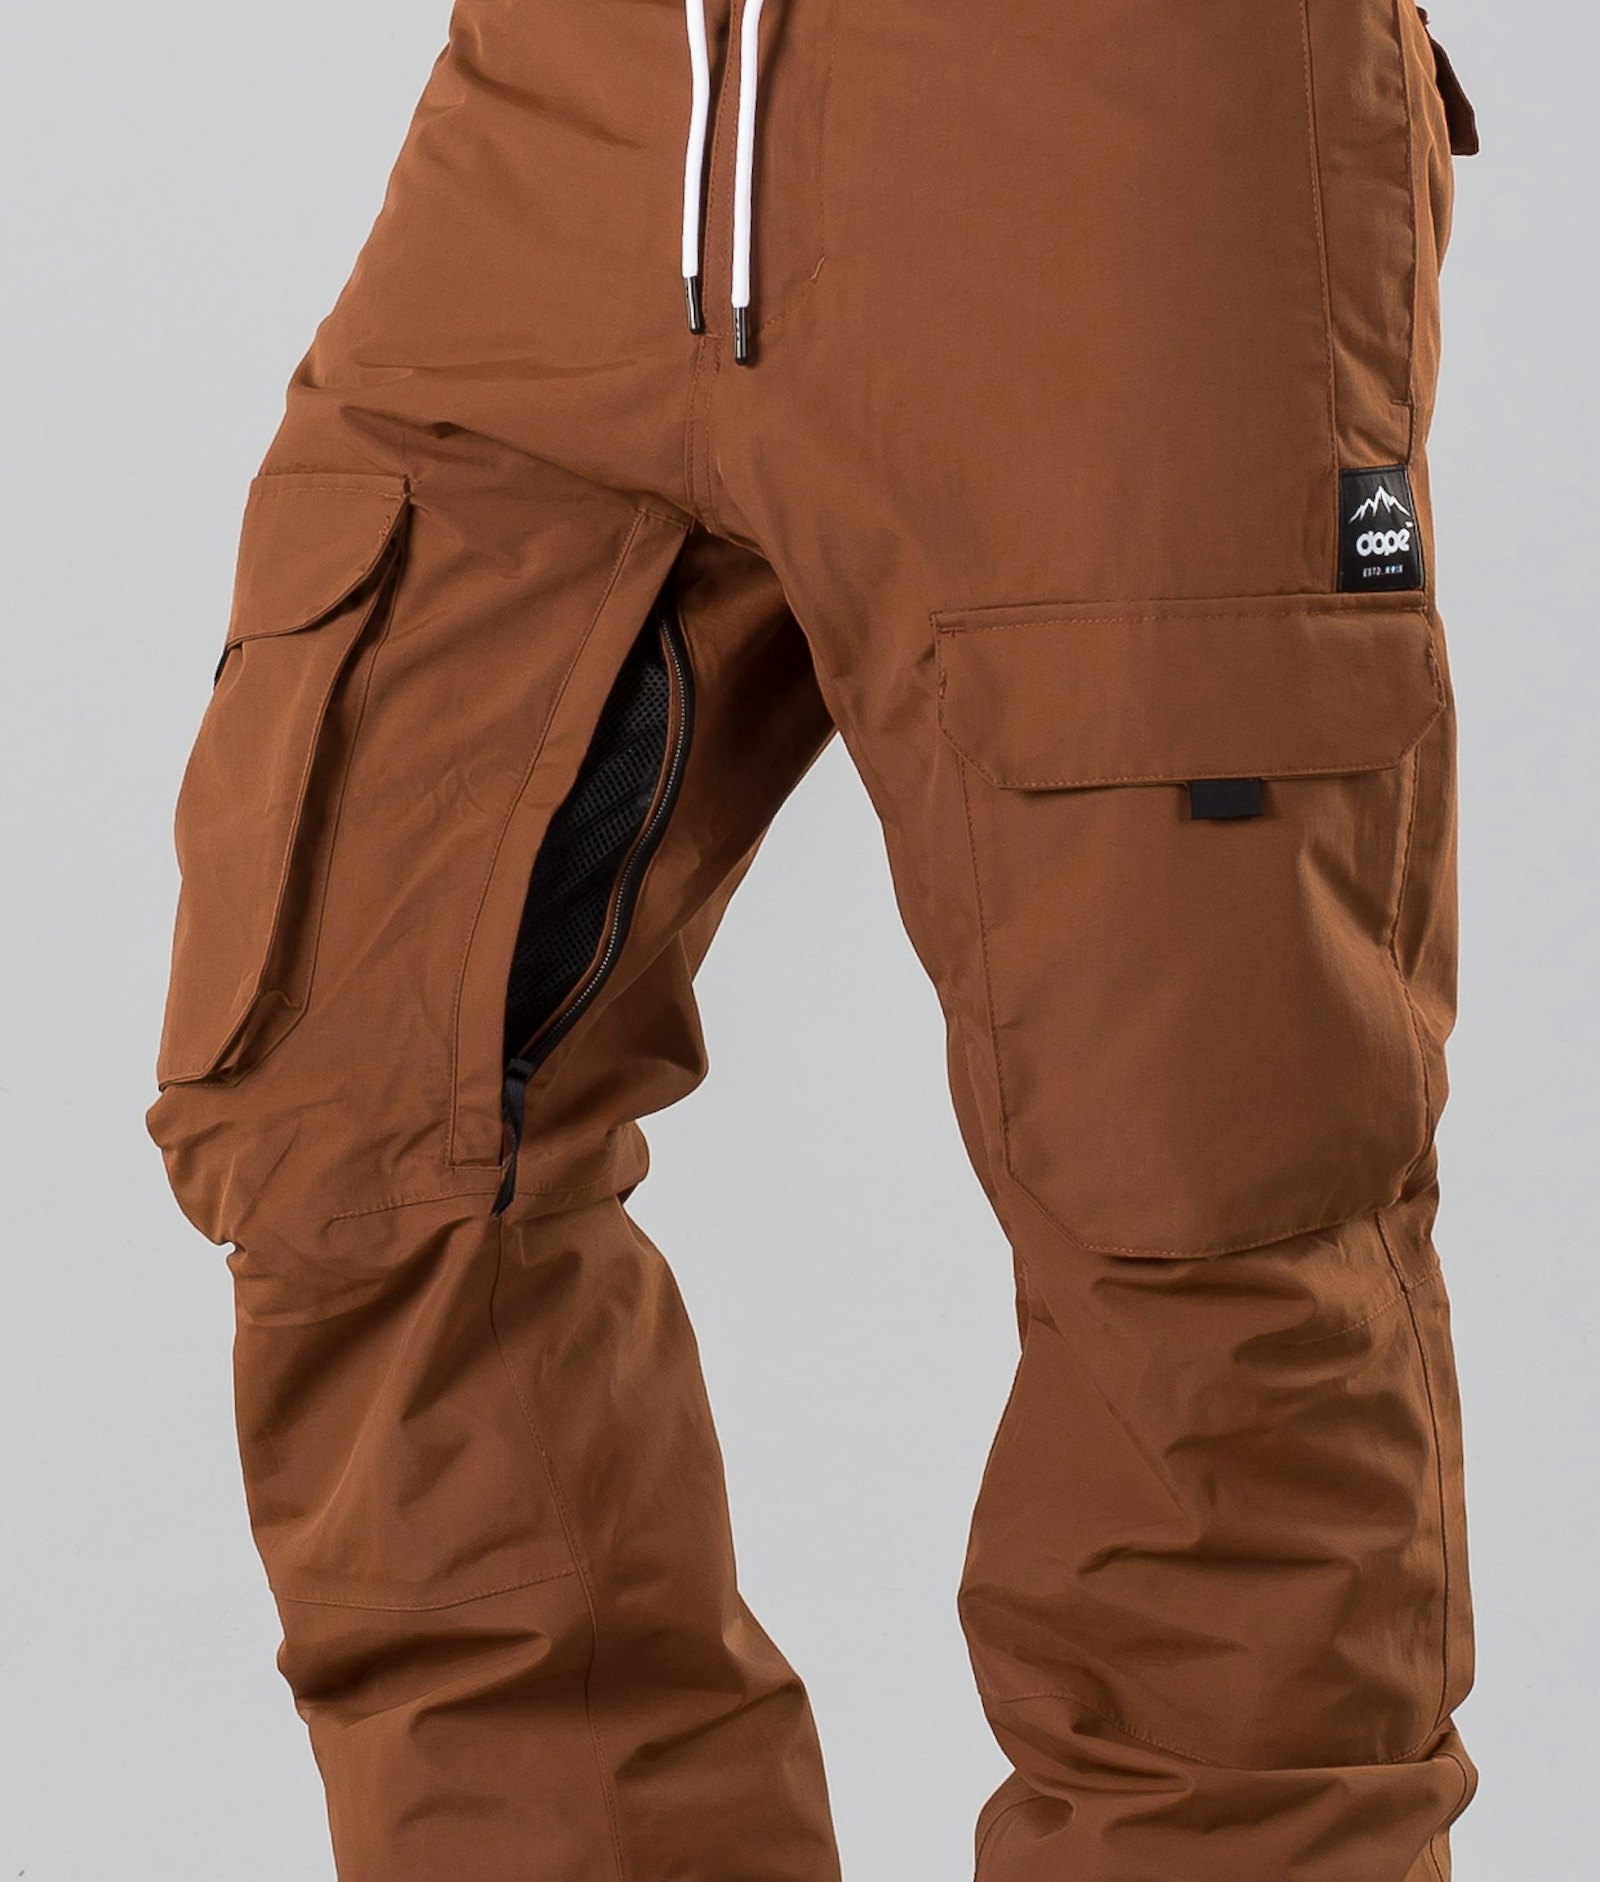 Dope Poise 2018 Snowboard Pants Men Adobe